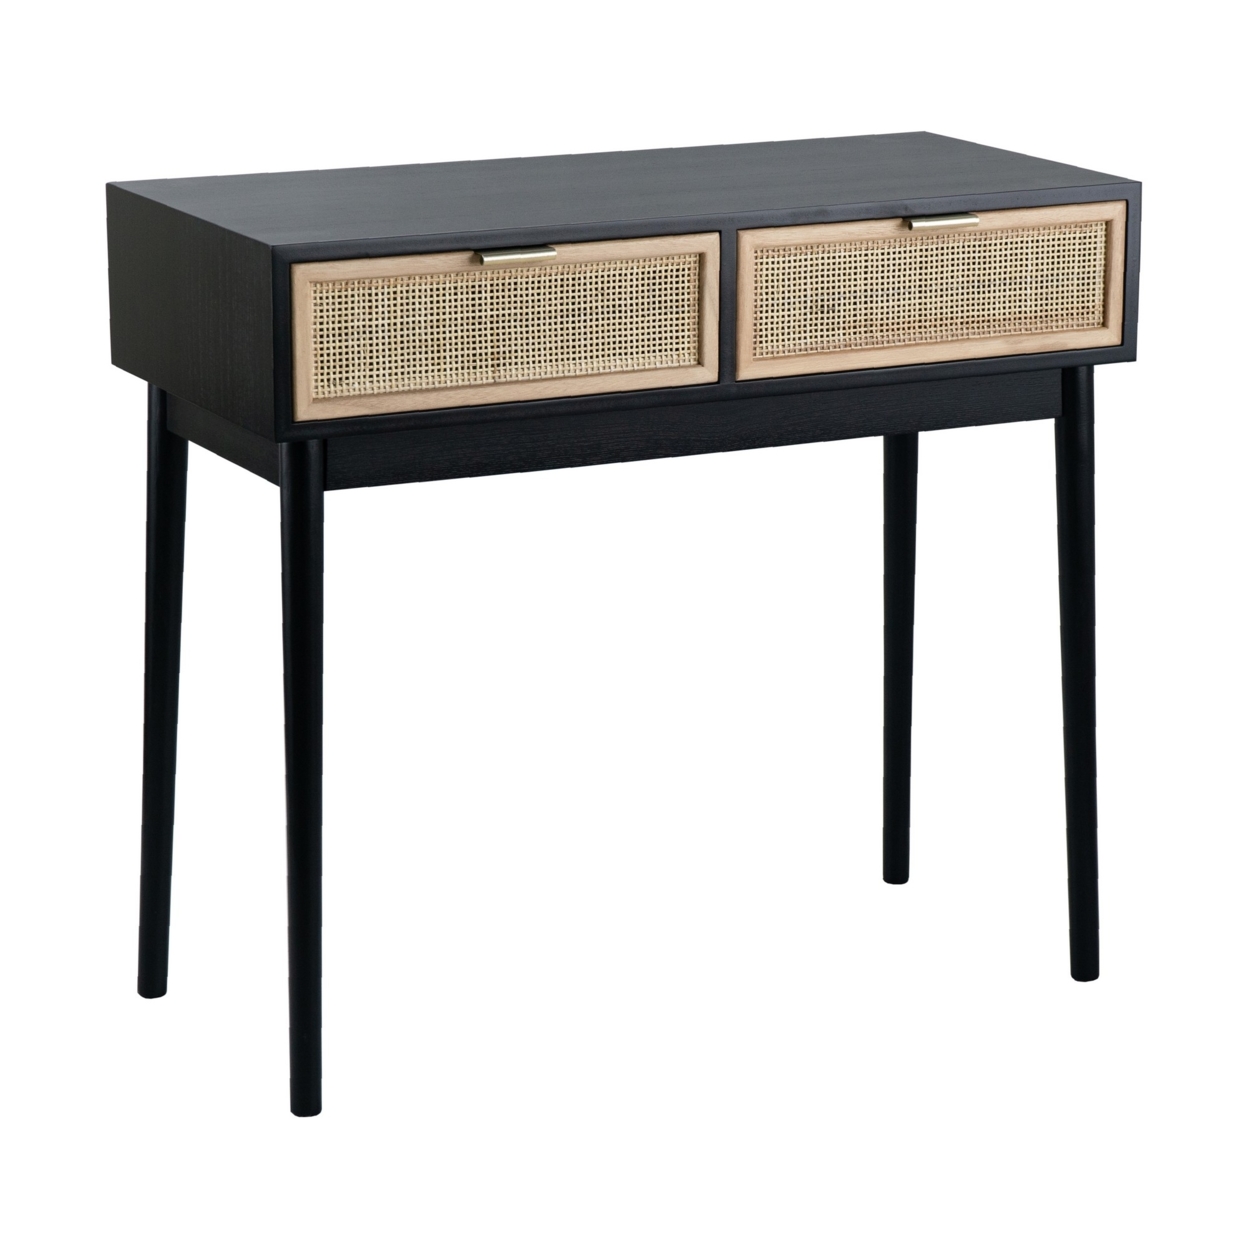 Ela 35 Inch 2 Drawer Wood Console Table, Woven Rattan Panels, Brown, Black- Saltoro Sherpi